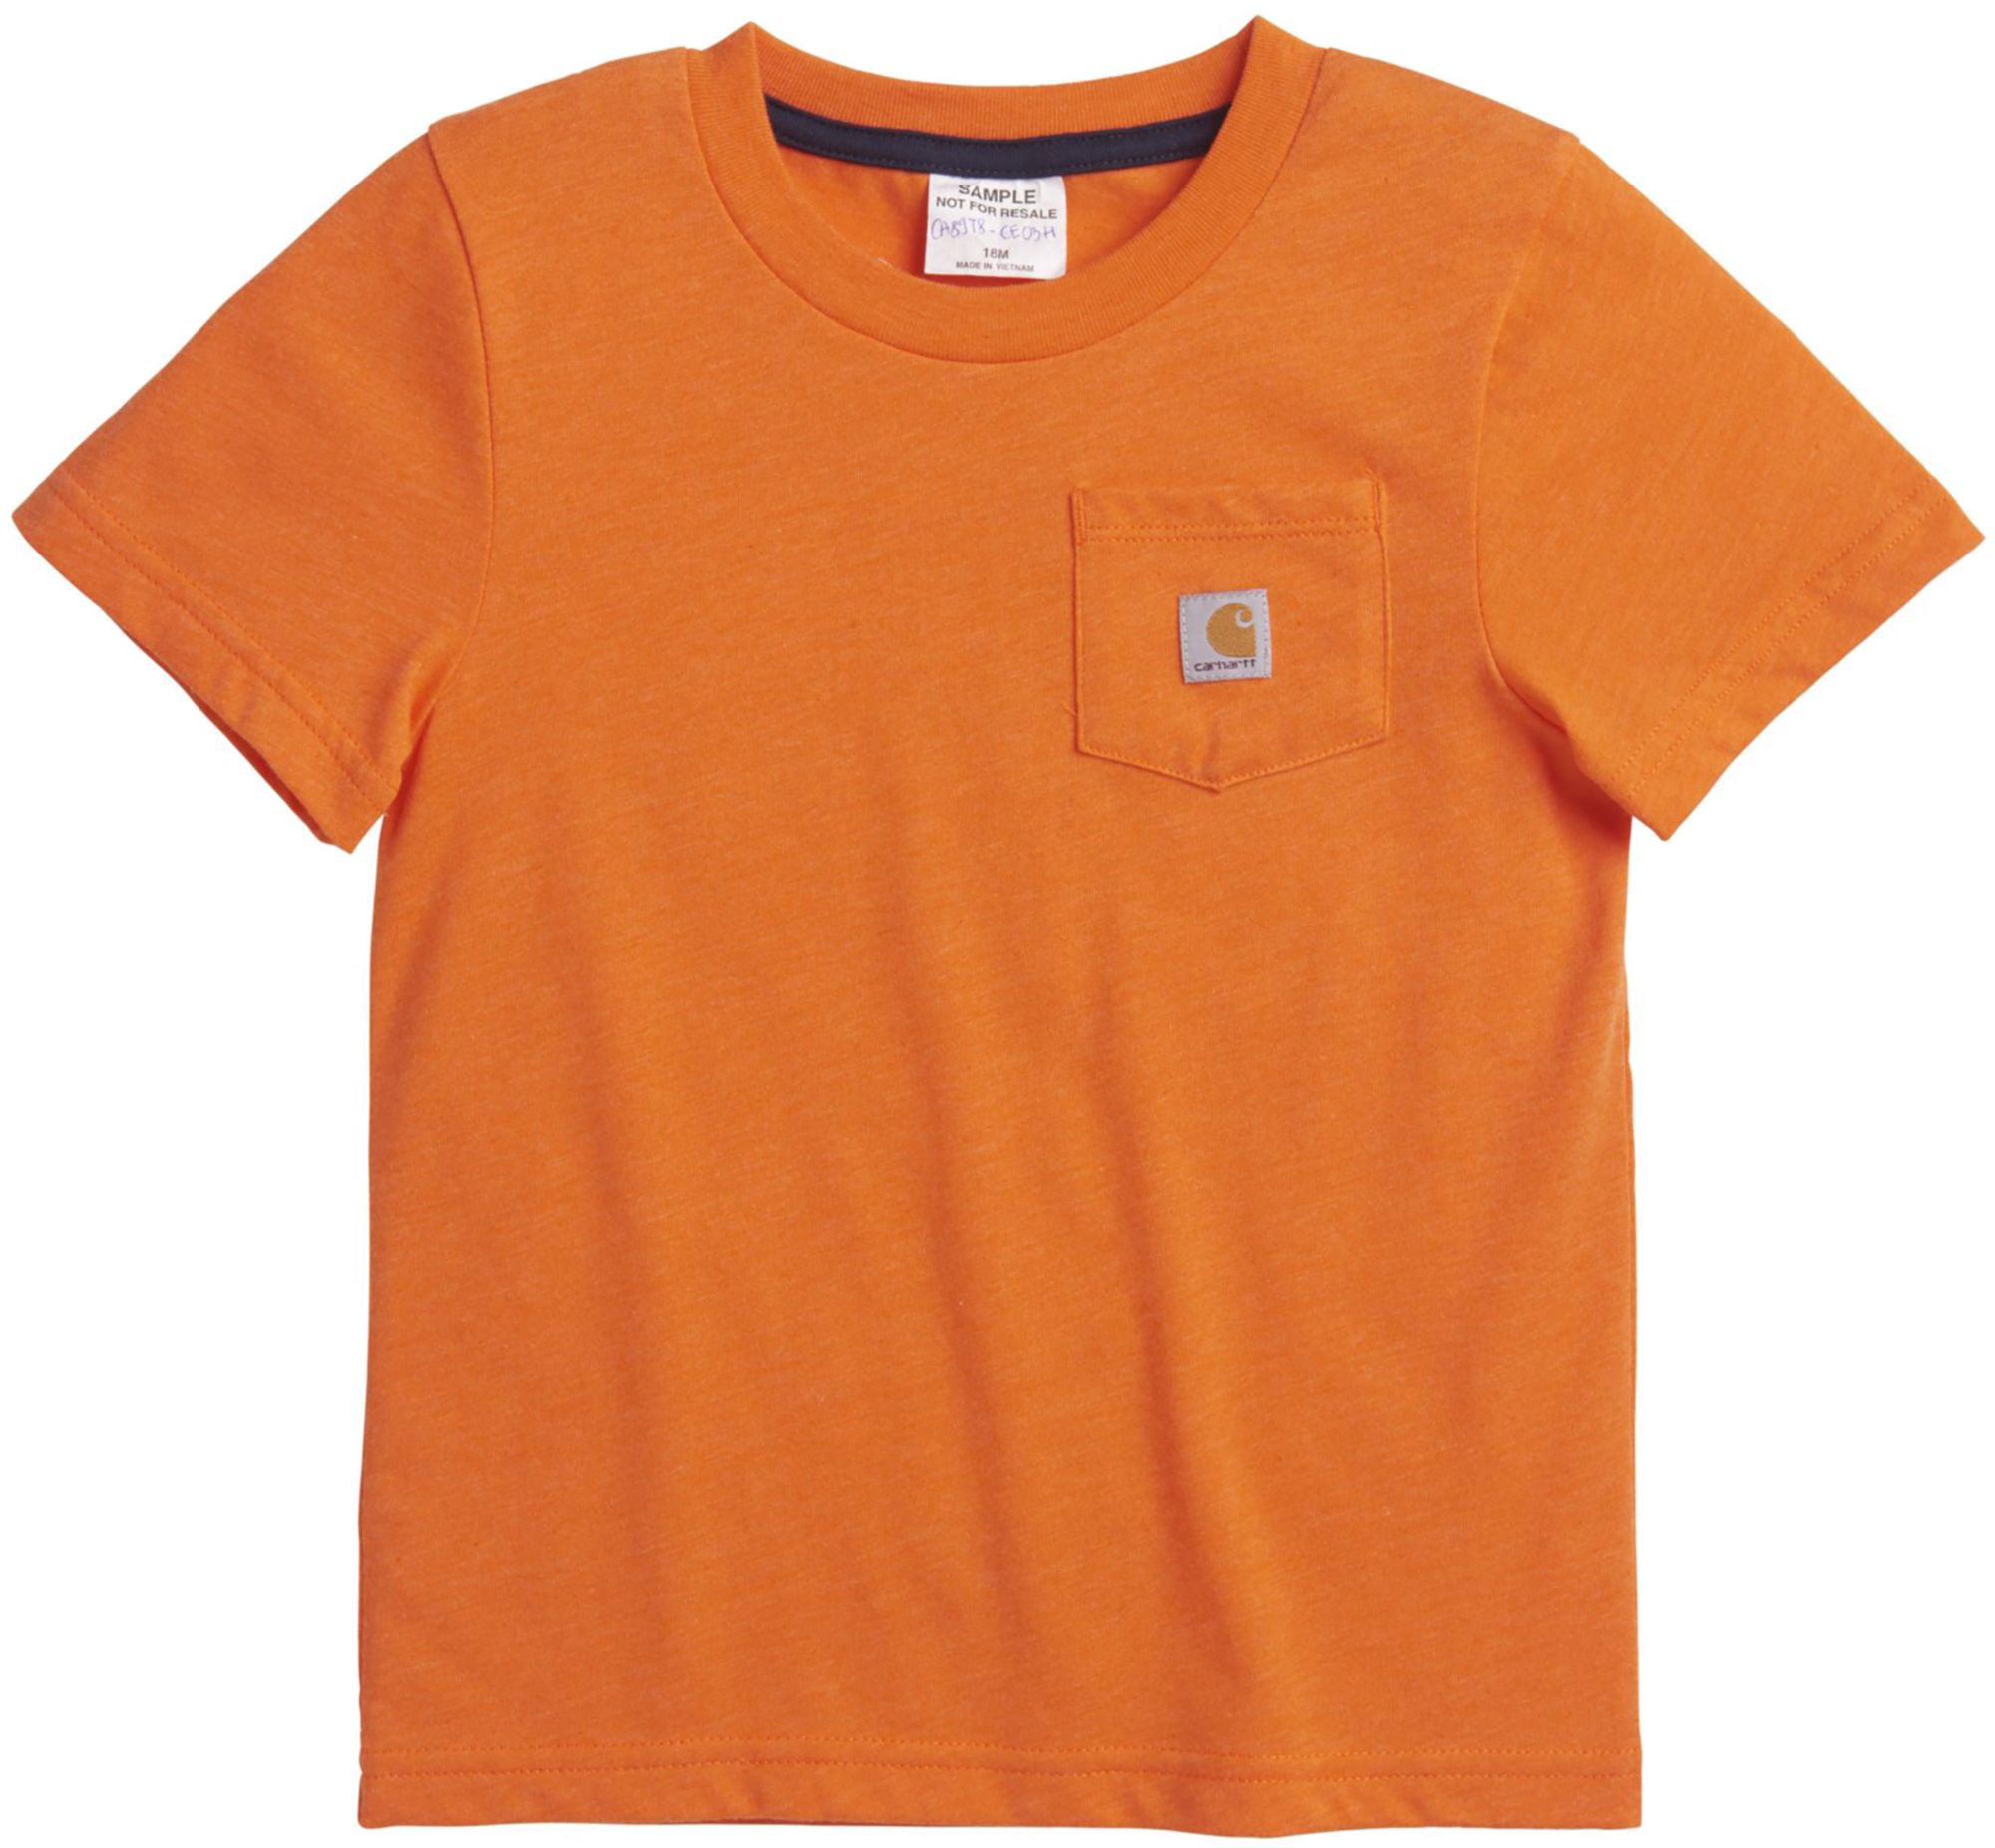 Carhartt - Carhartt Toddler Boys' Pocket T-Shirt - Walmart.com ...